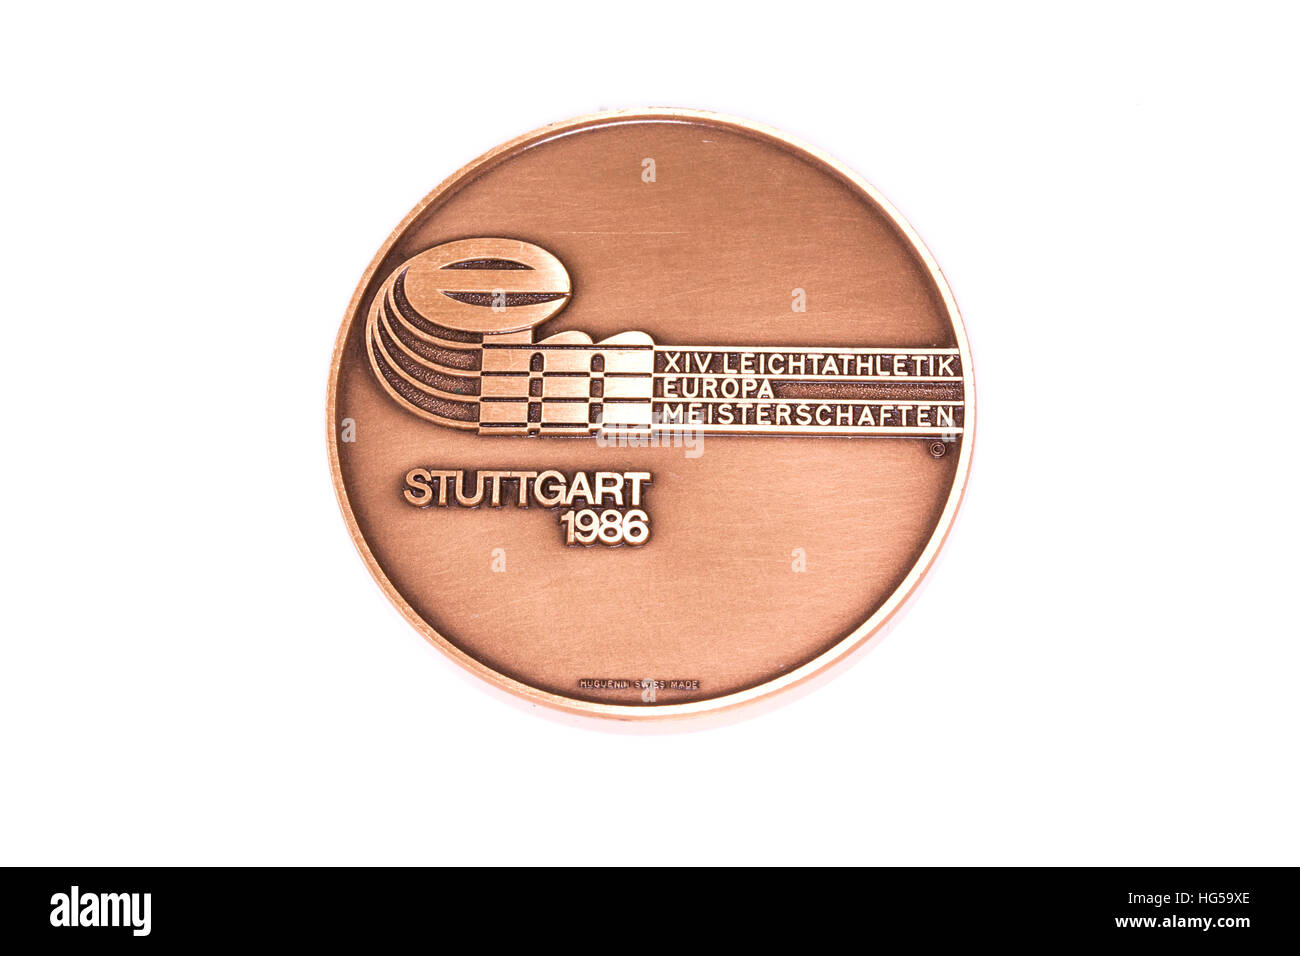 Stuttgart 1986 Athletics European Championships Participation medal obverse. Kouvola Finland 06.09.2016 Stock Photo